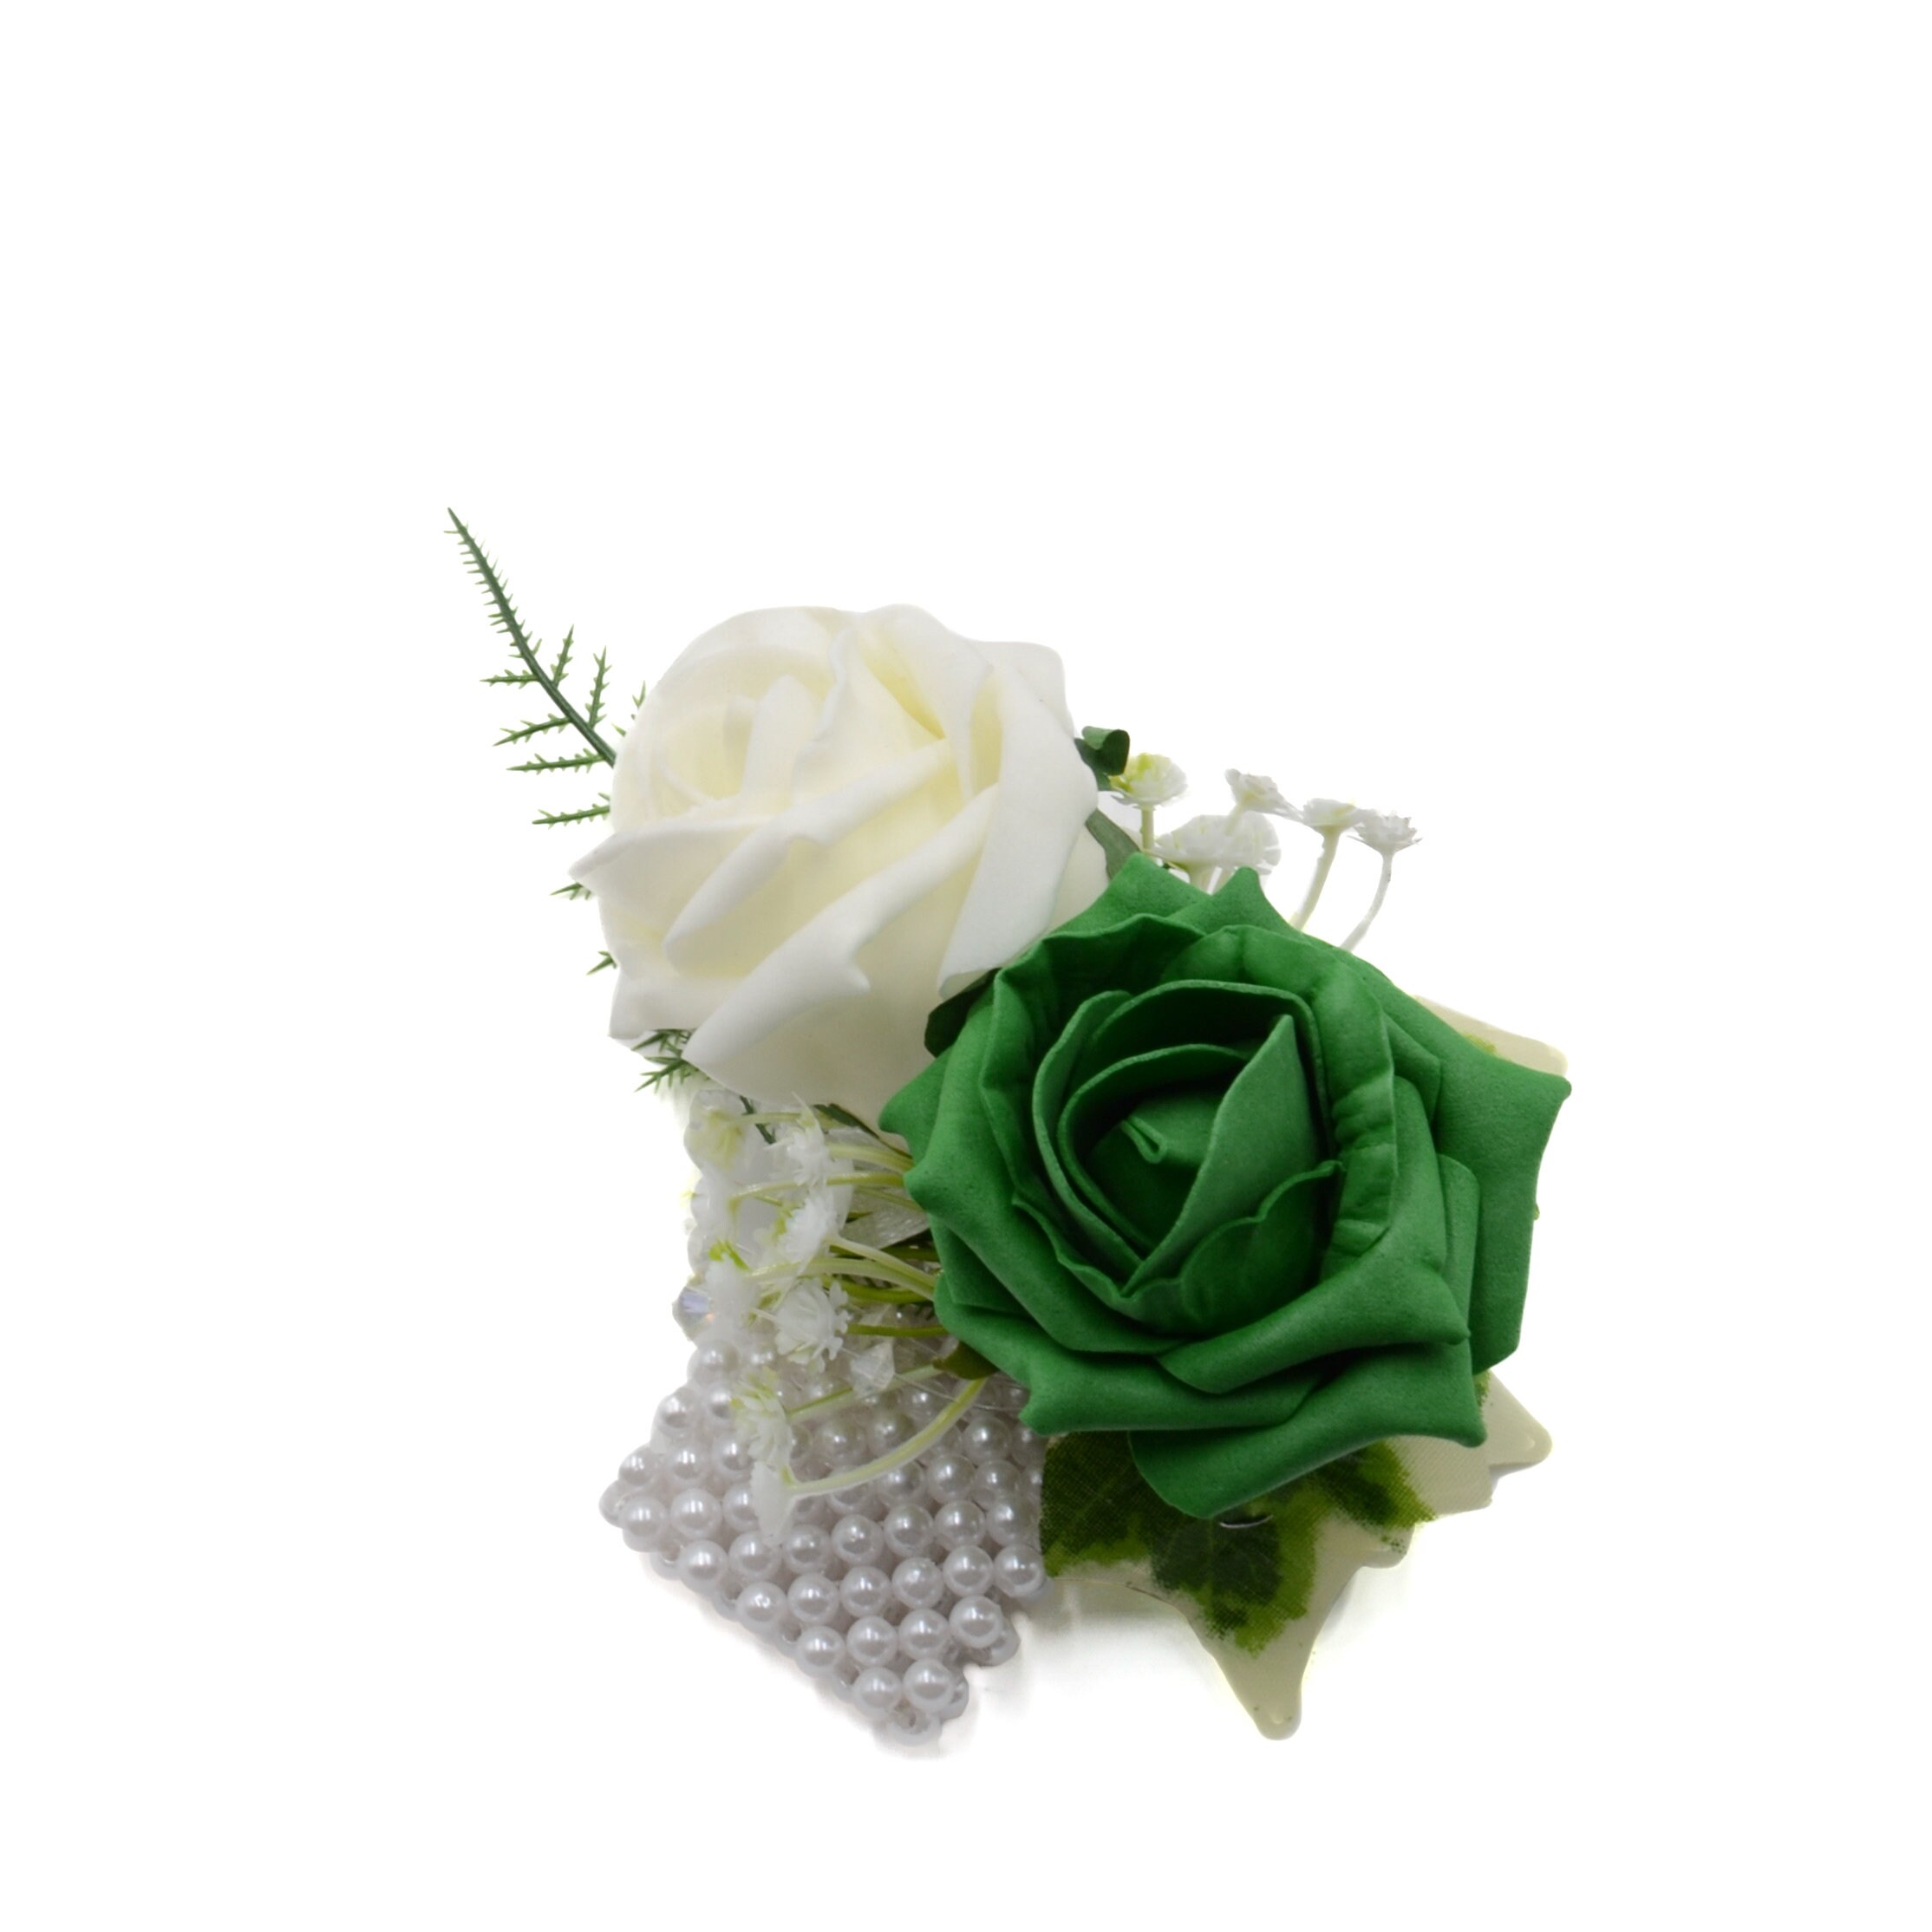 Green Dry Foam, Dry Floral Foam Bricks, Foam for Preserved Roses